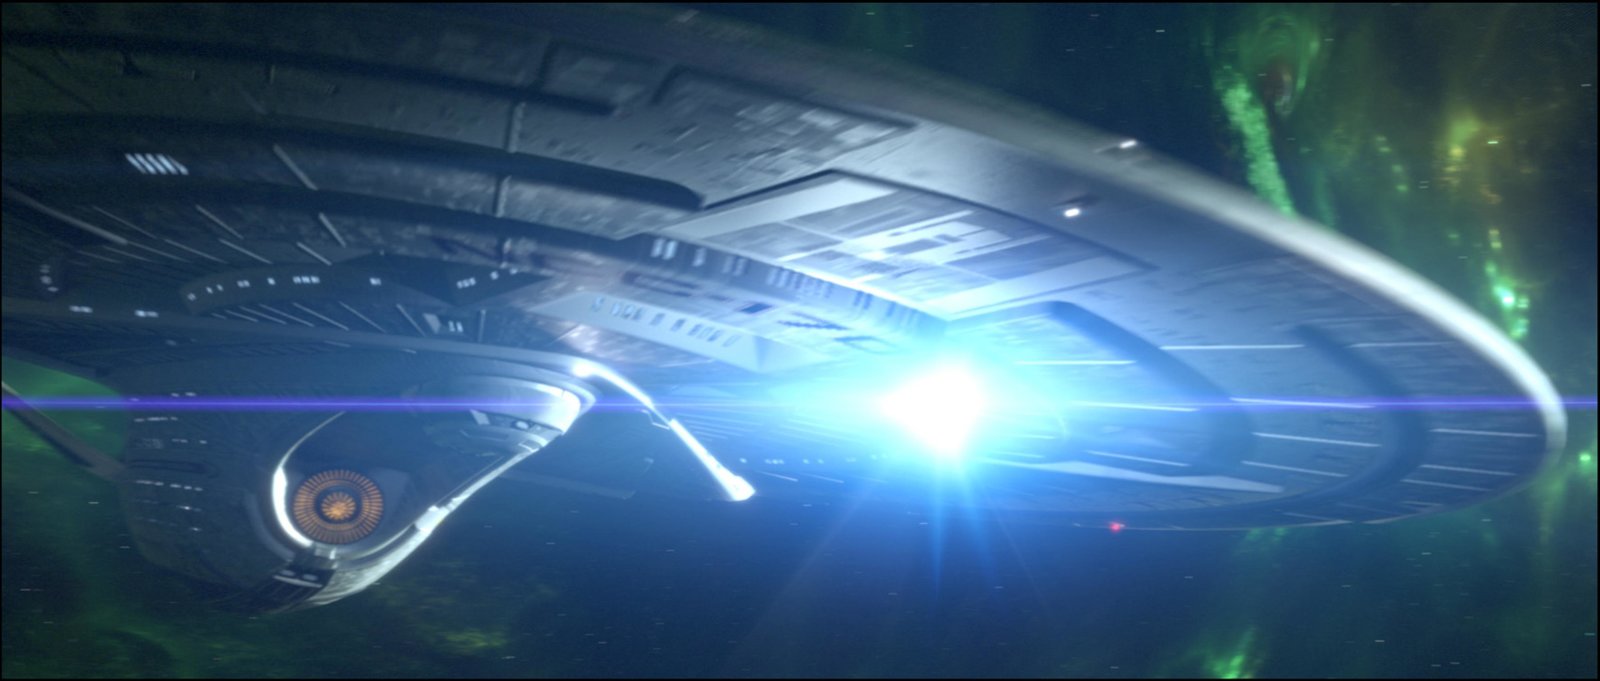 Star Trek 10 - Nemesis (blu-ray)